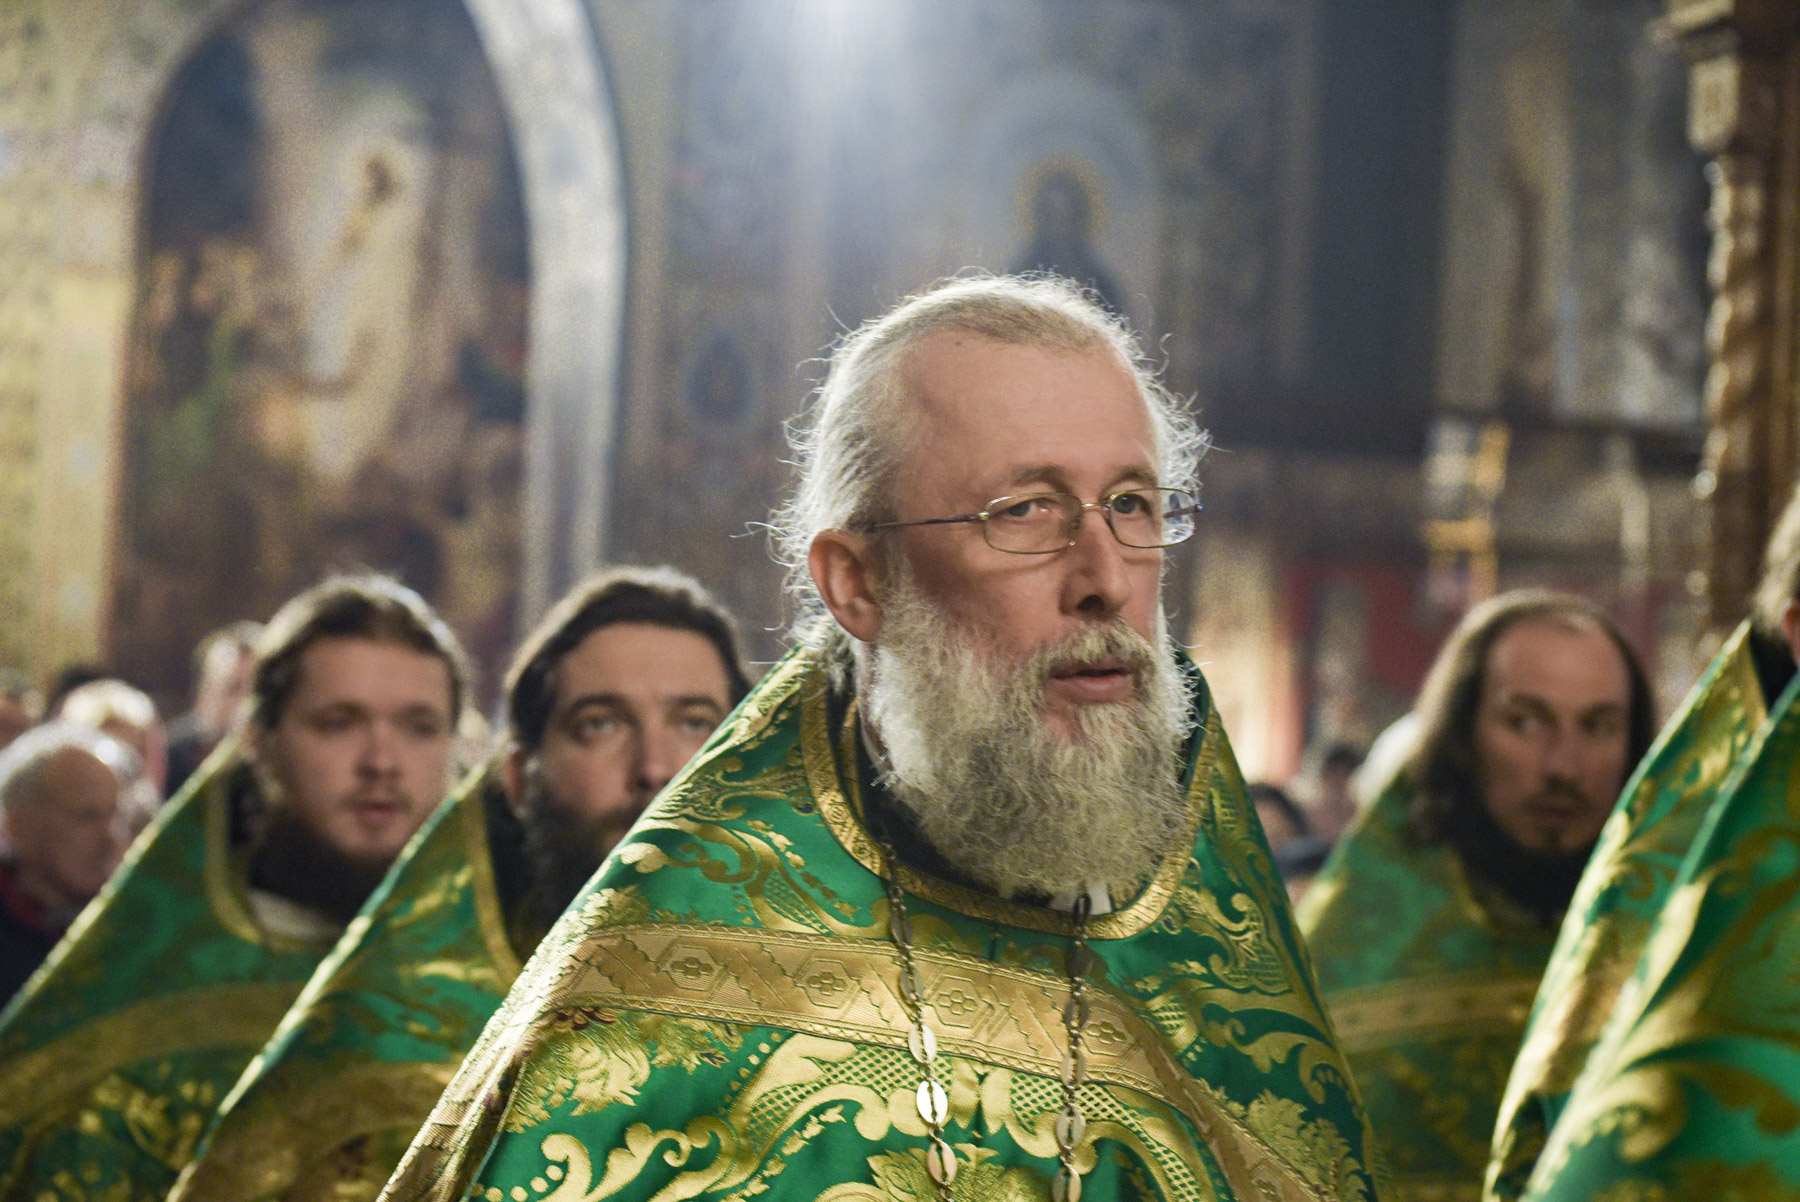 photos of orthodox christmas 0092 2